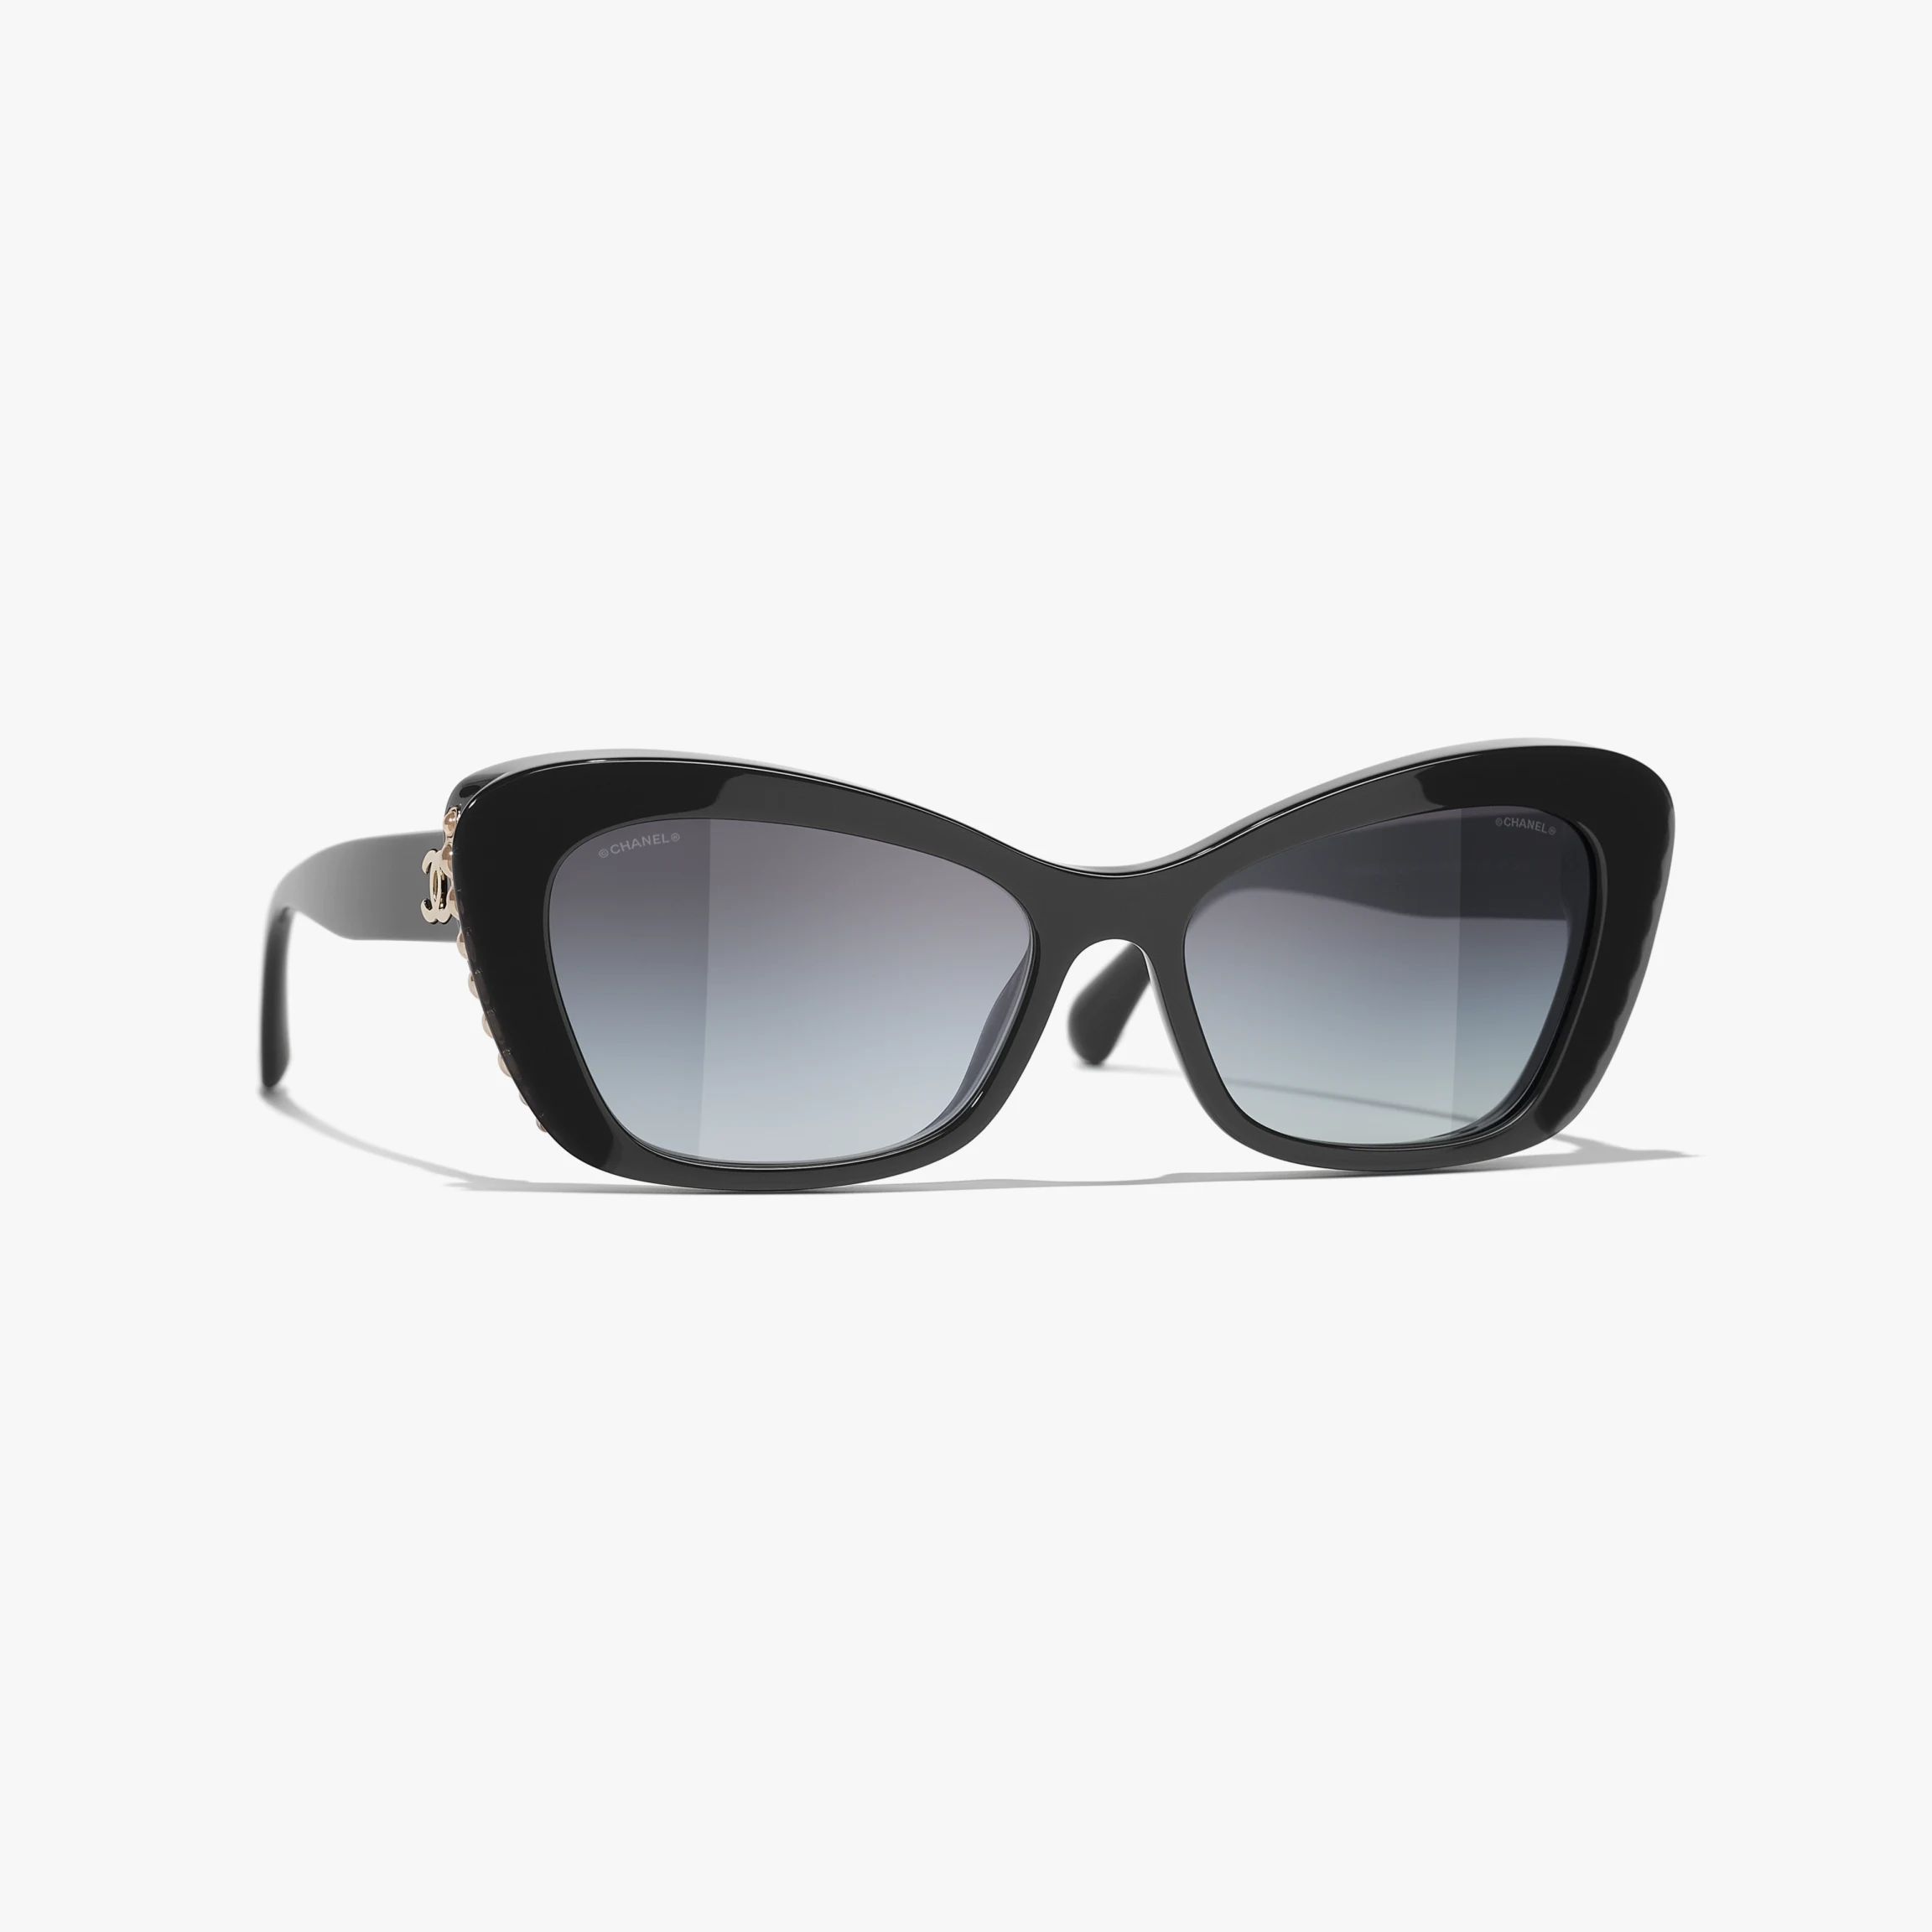 Sunglasses: Cat Eye Sunglasses, acetate & glass pearls — Fashion | CHANEL | Chanel, Inc. (US)